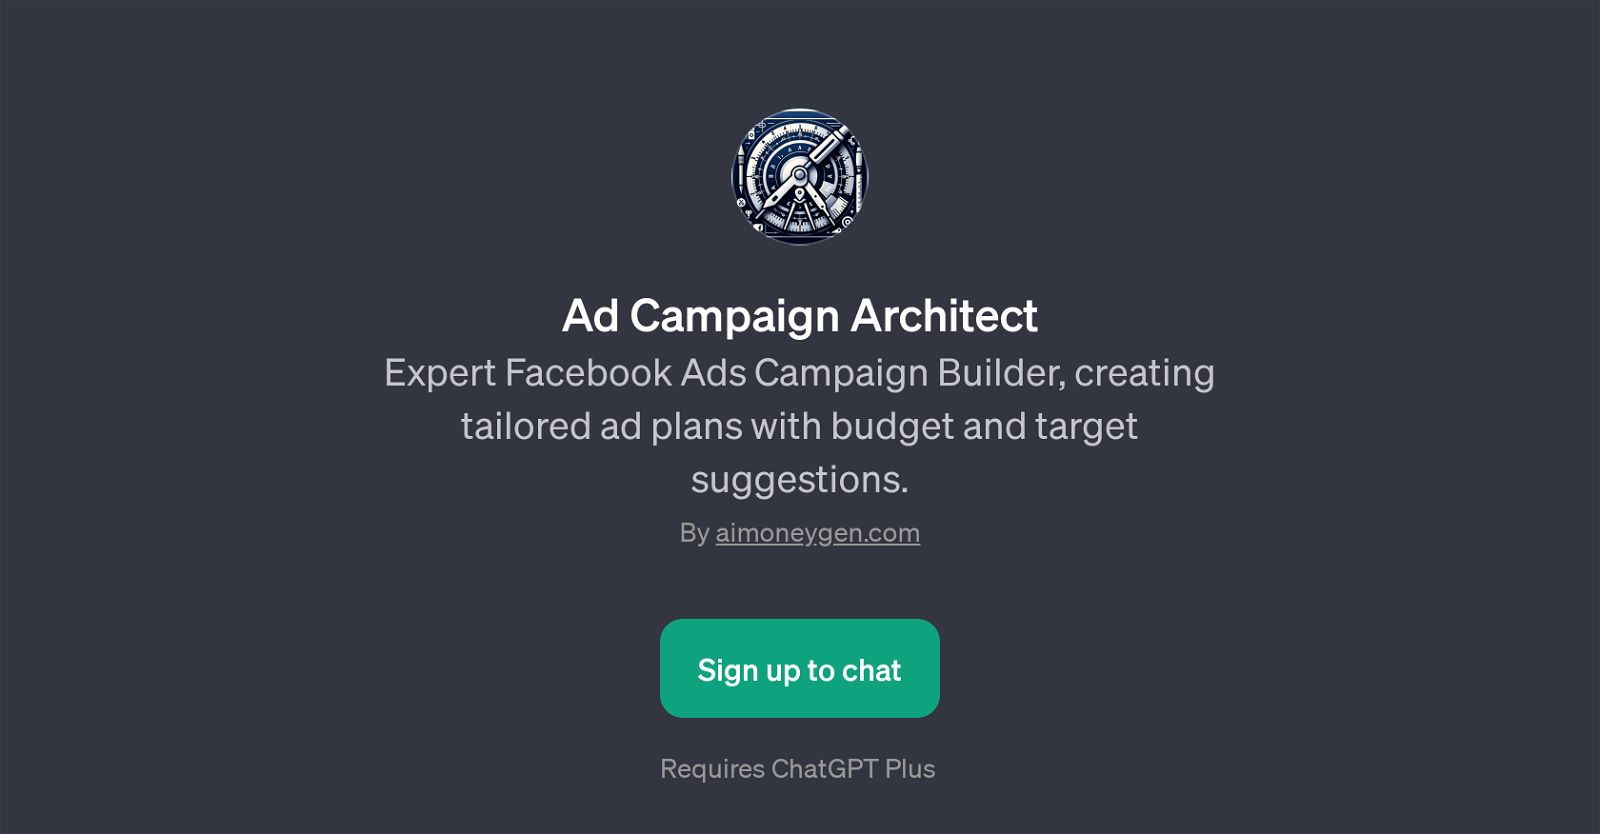 Ad Campaign Architect website